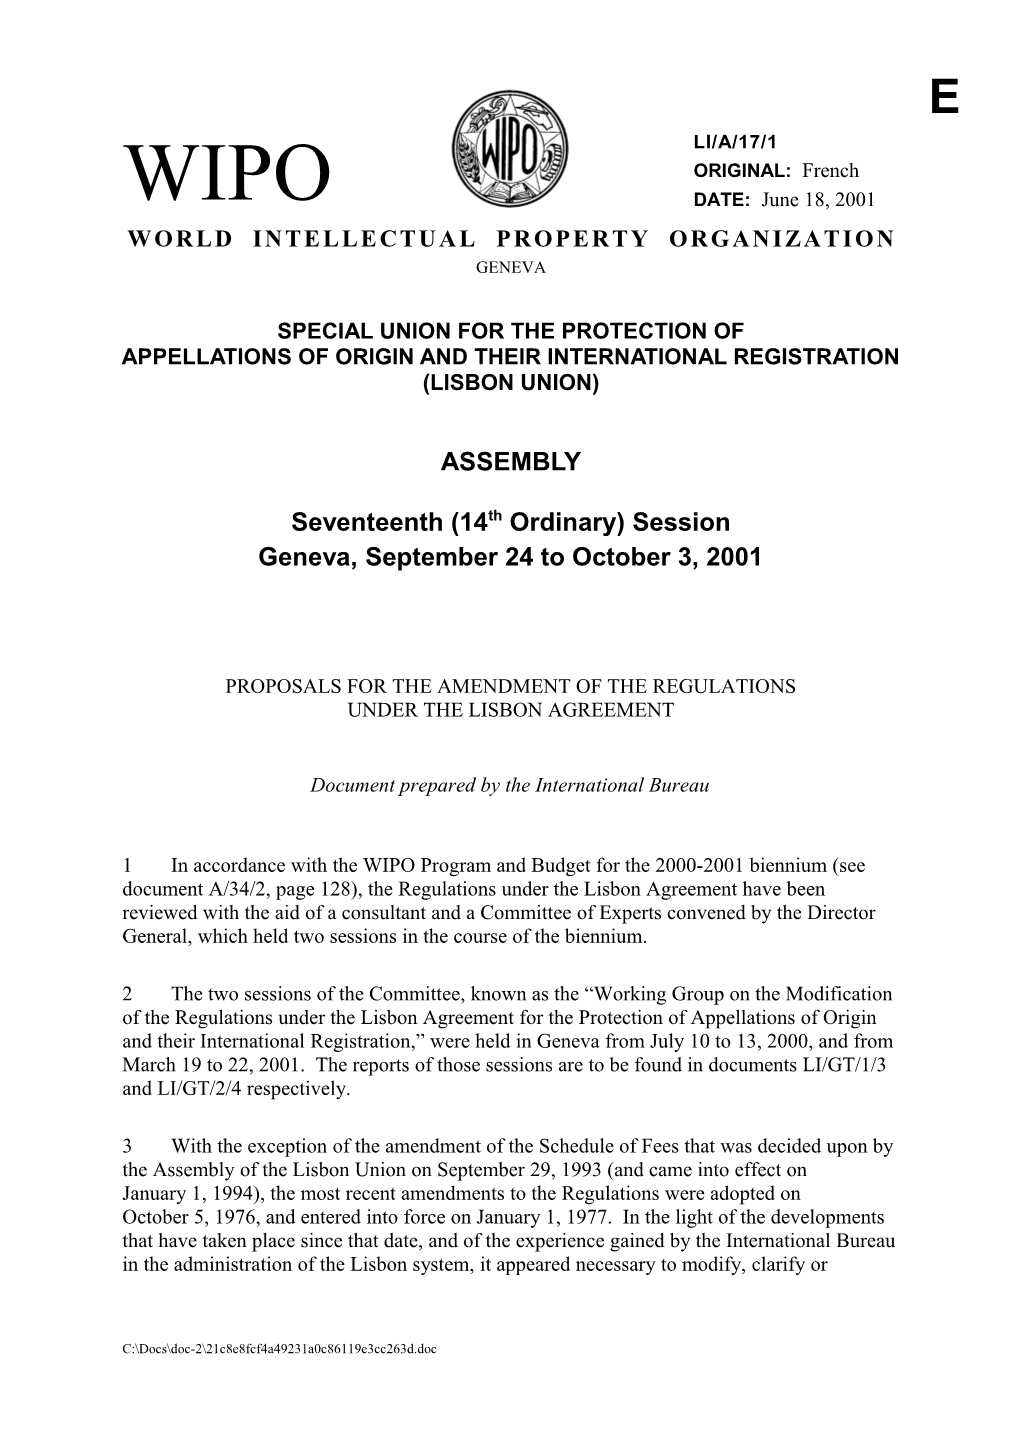 LI/A/17/1: Proposals for the Amendment of the Regulations Under the Lisbon Agreement